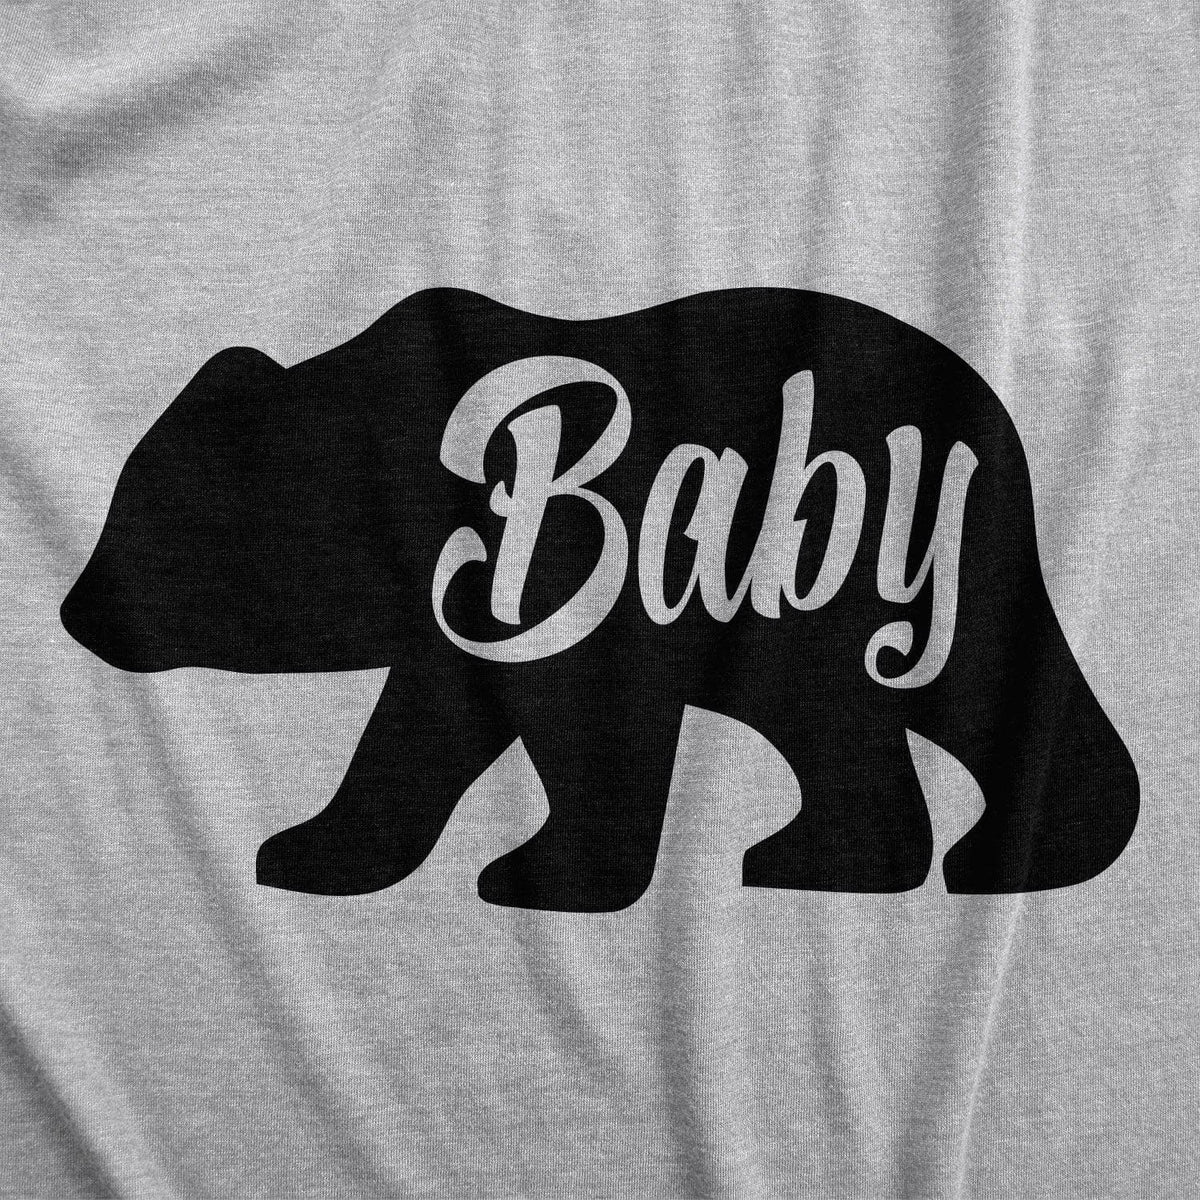 Baby Bear Baby Bodysuit - Crazy Dog T-Shirts